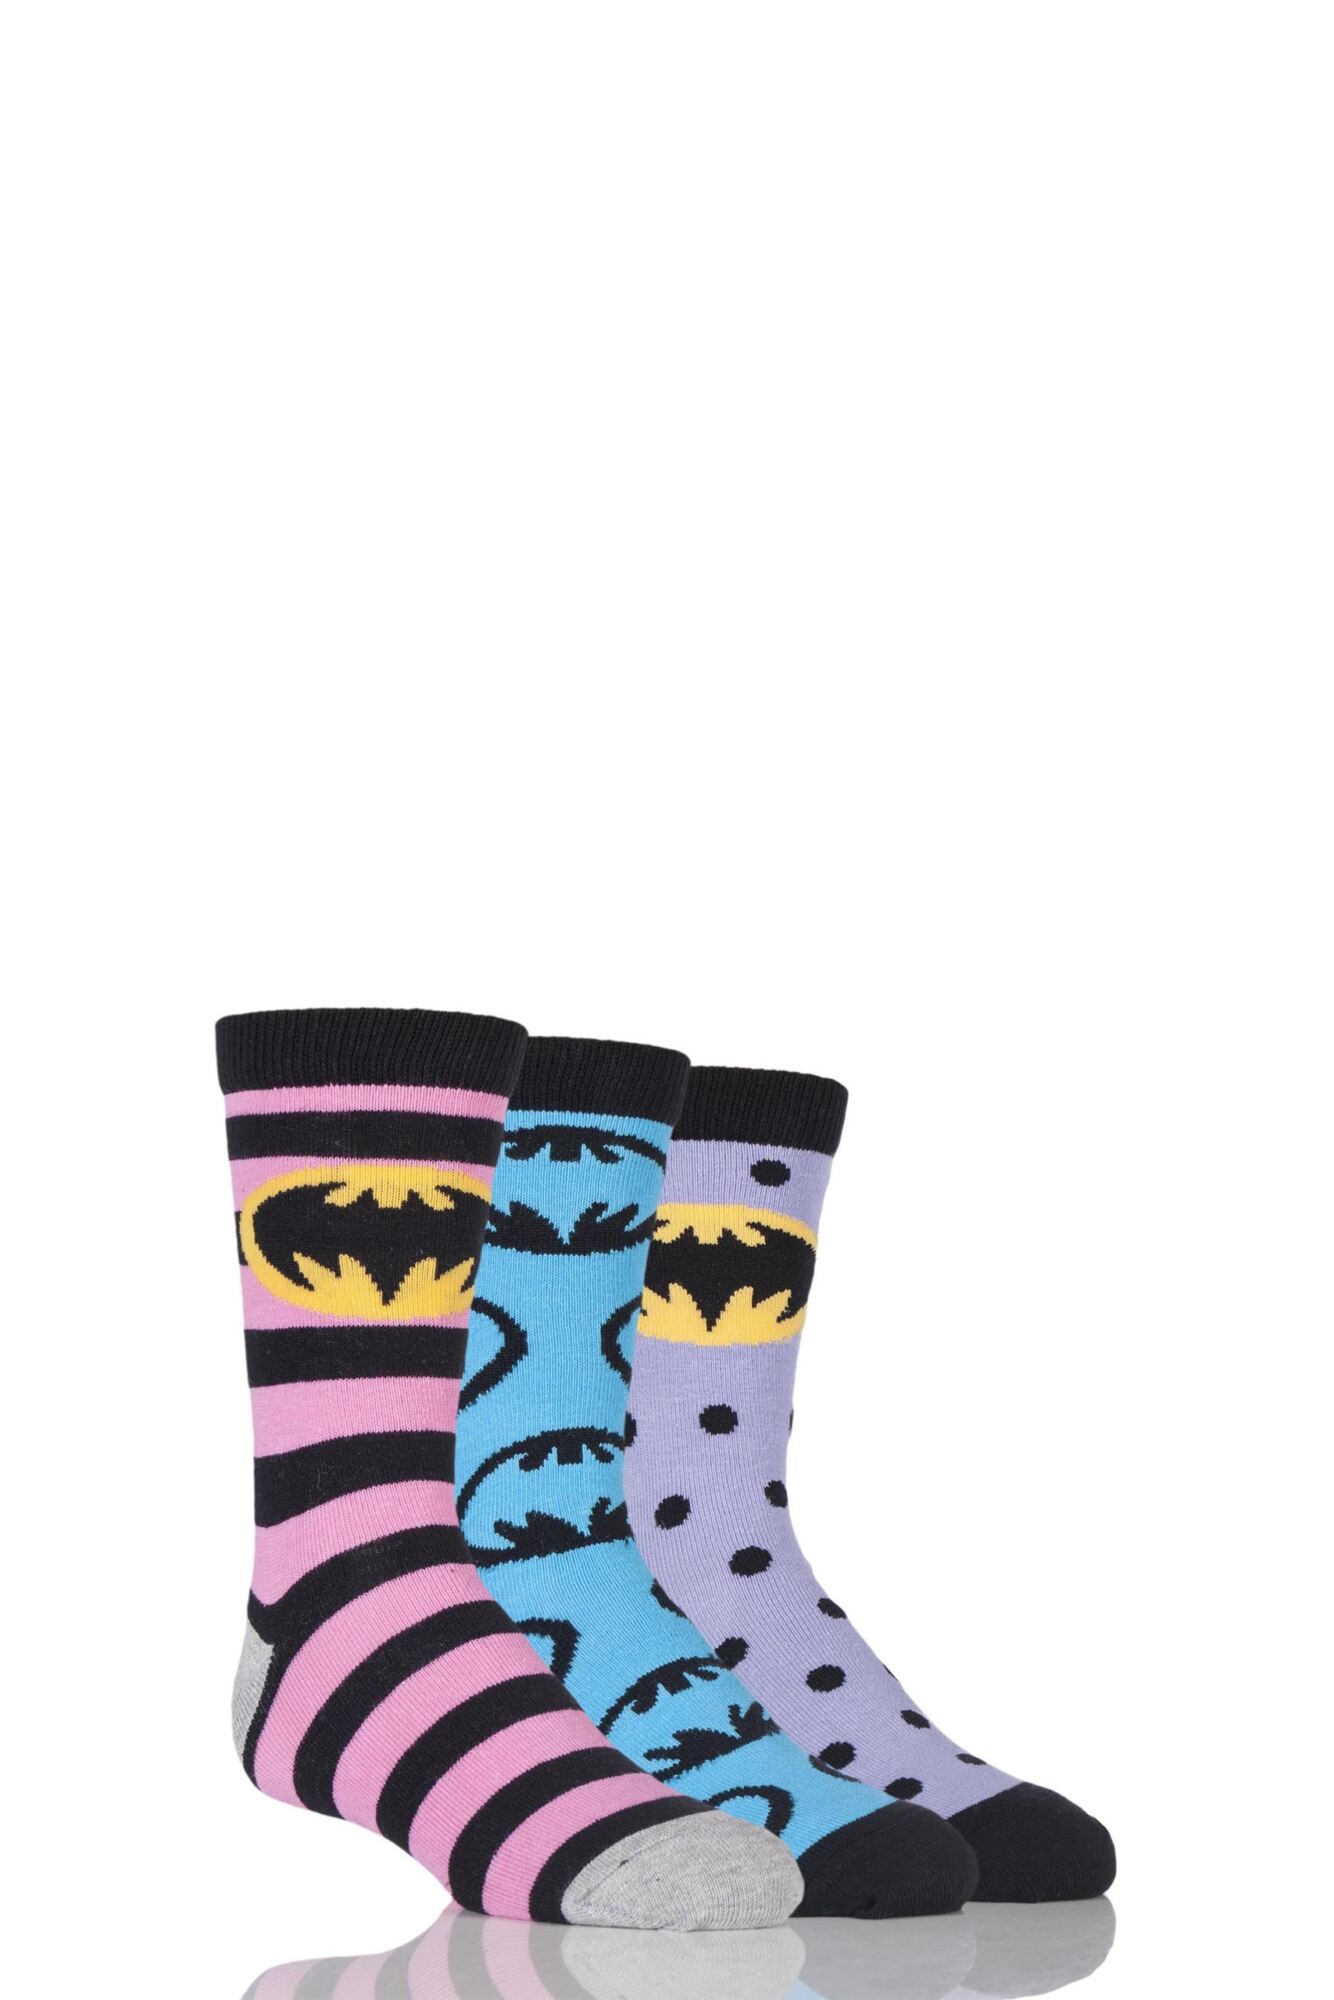 3 Pair Batman / Batgirl Striped, Spotty and All Over Motif Cotton Socks Girls 